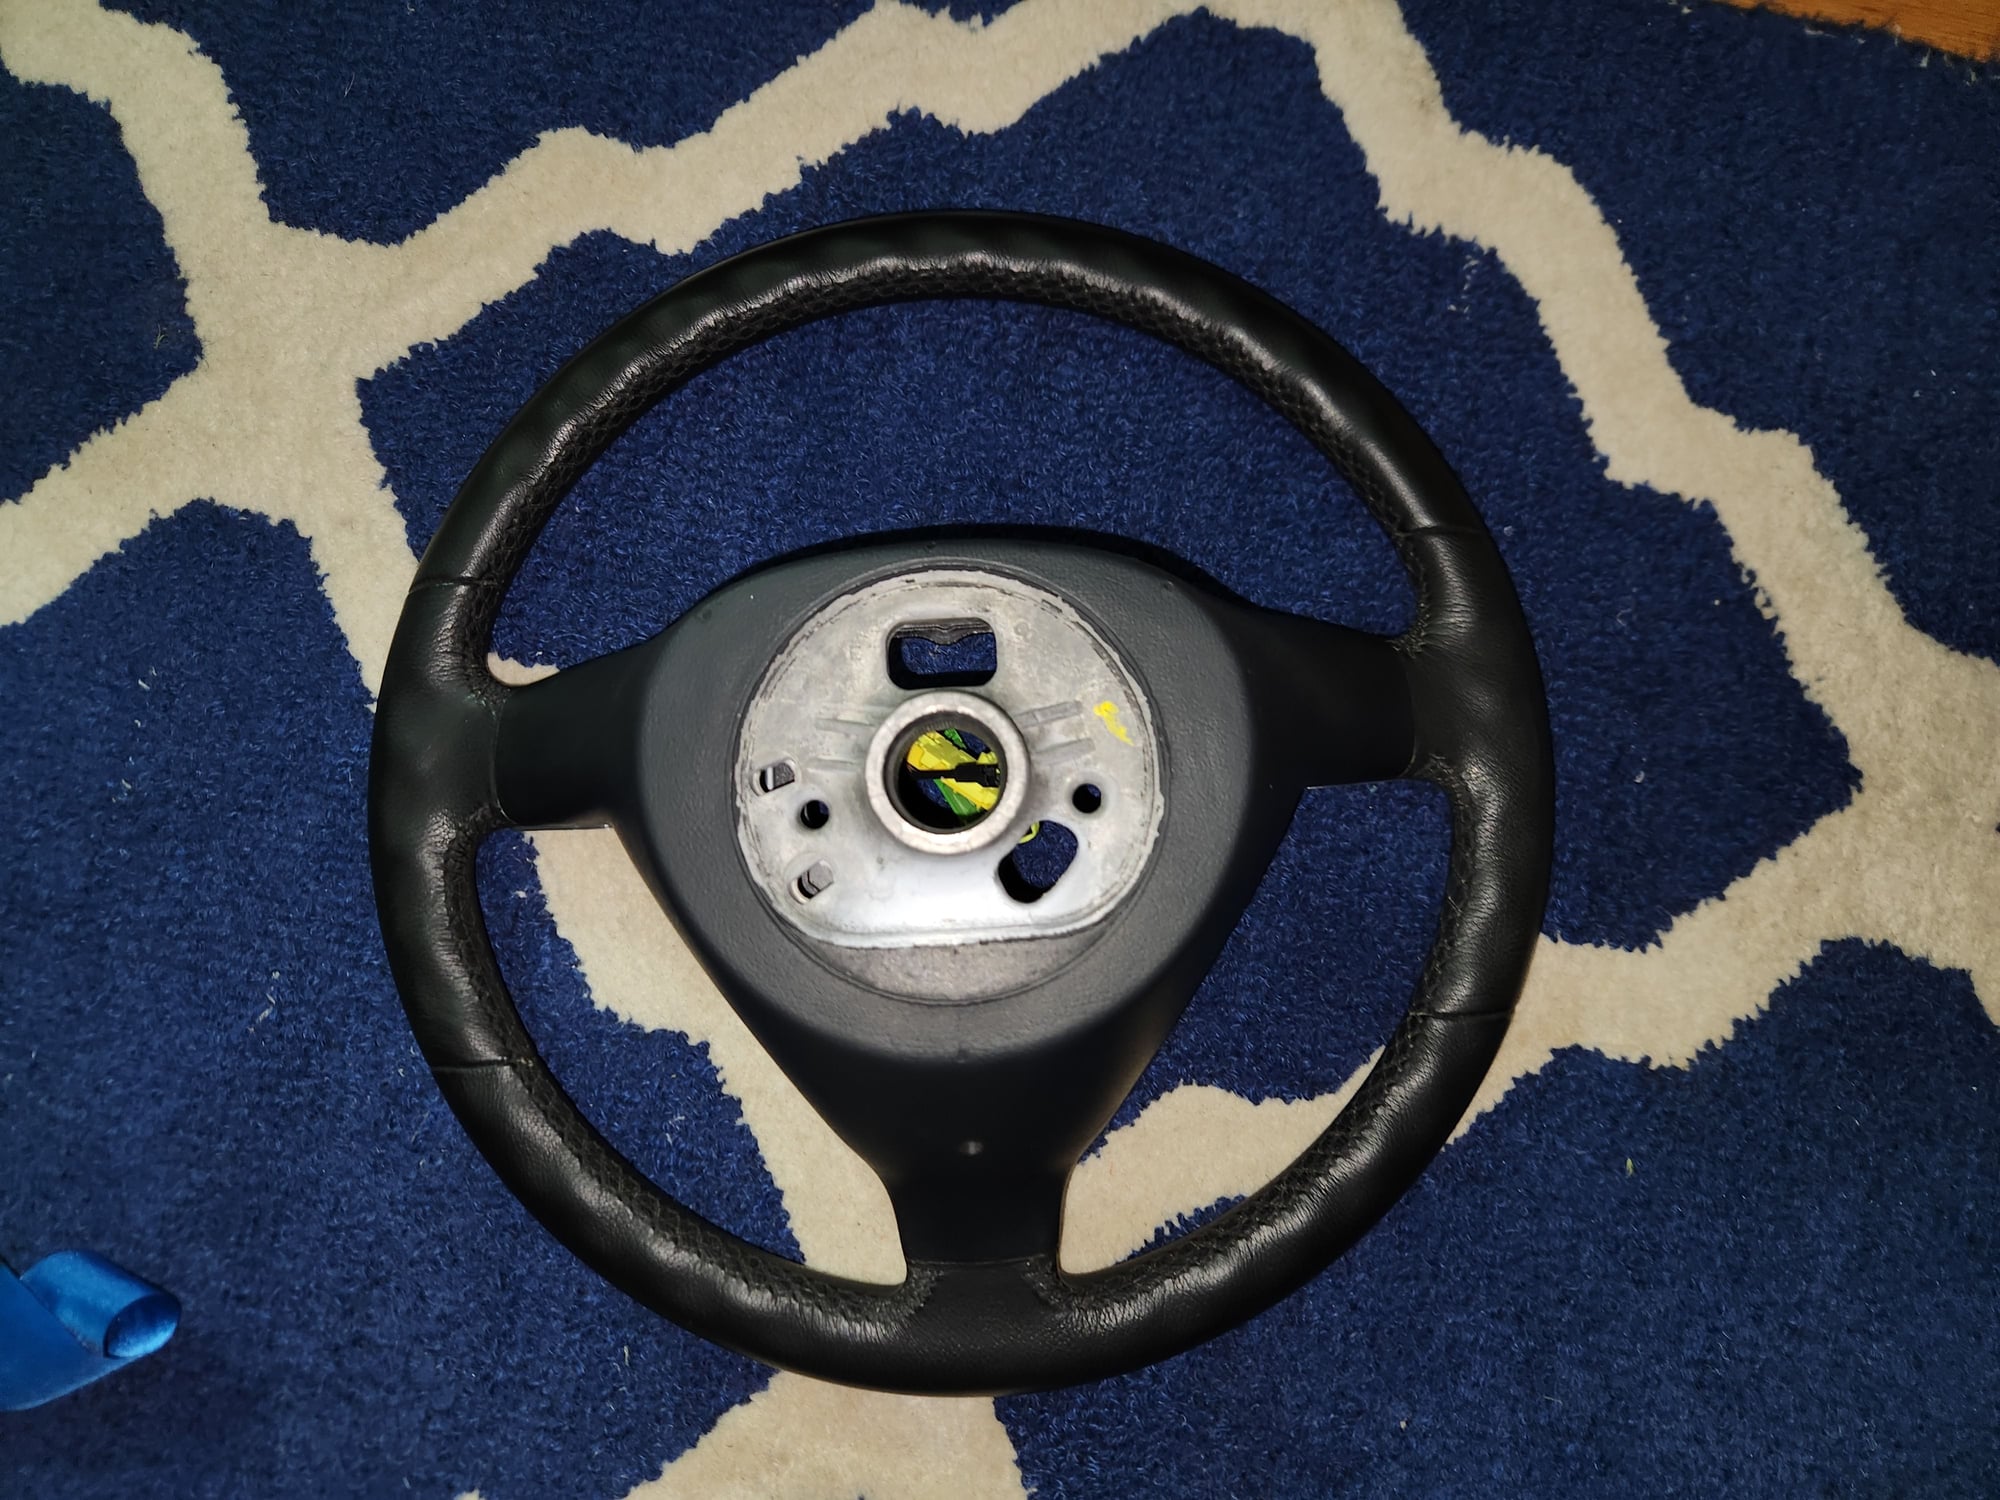 Steering/Suspension - 987/997 Non-Multifunction Steering Wheel and Airbag - Used - All Years  All Models - Oak Ridge, NJ 07438, United States